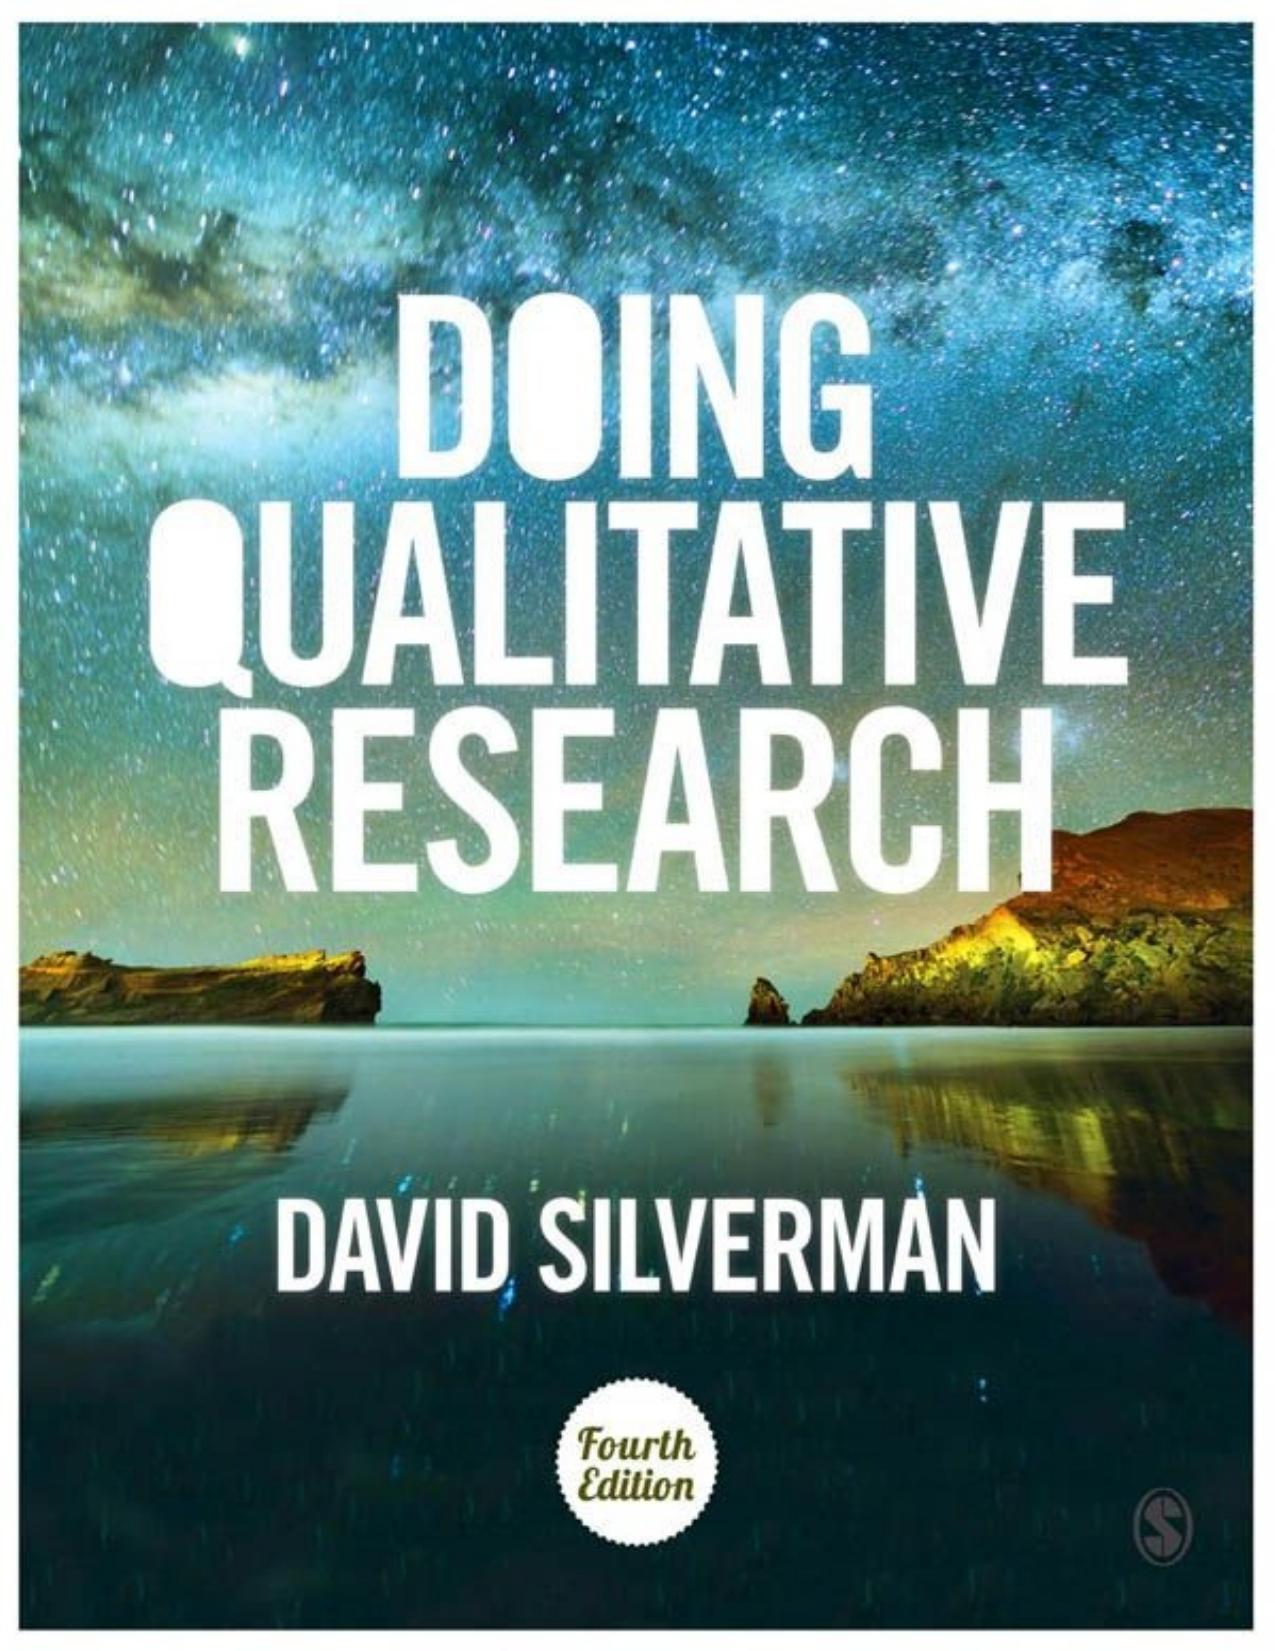 Doing Qualitative Research A Practical Handbook.jpg